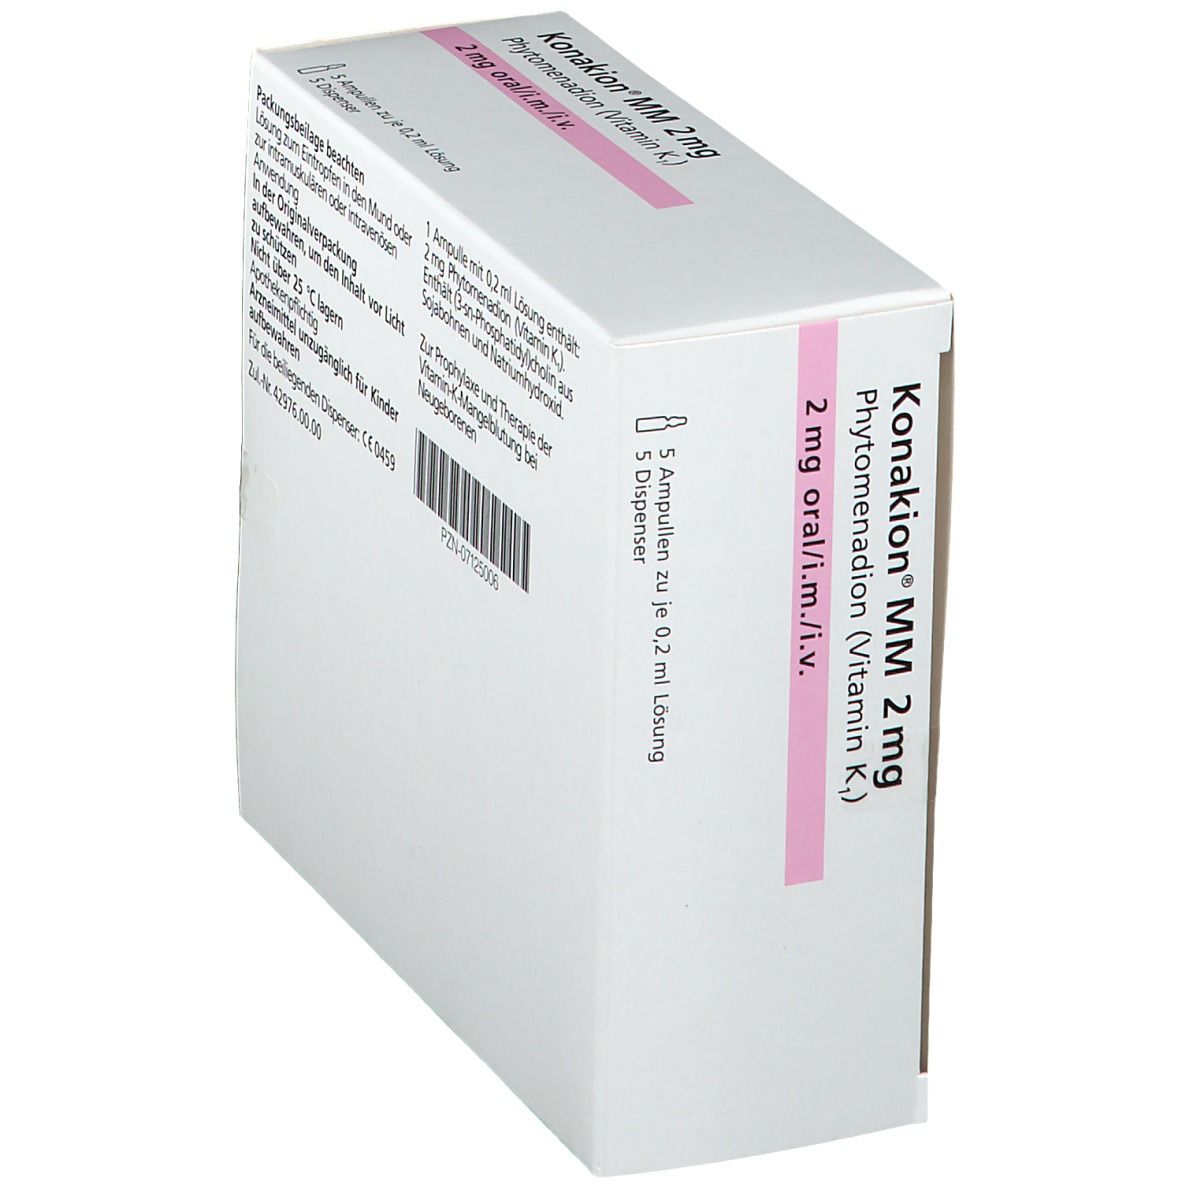 Konakion Mm 2 mg Ampullen